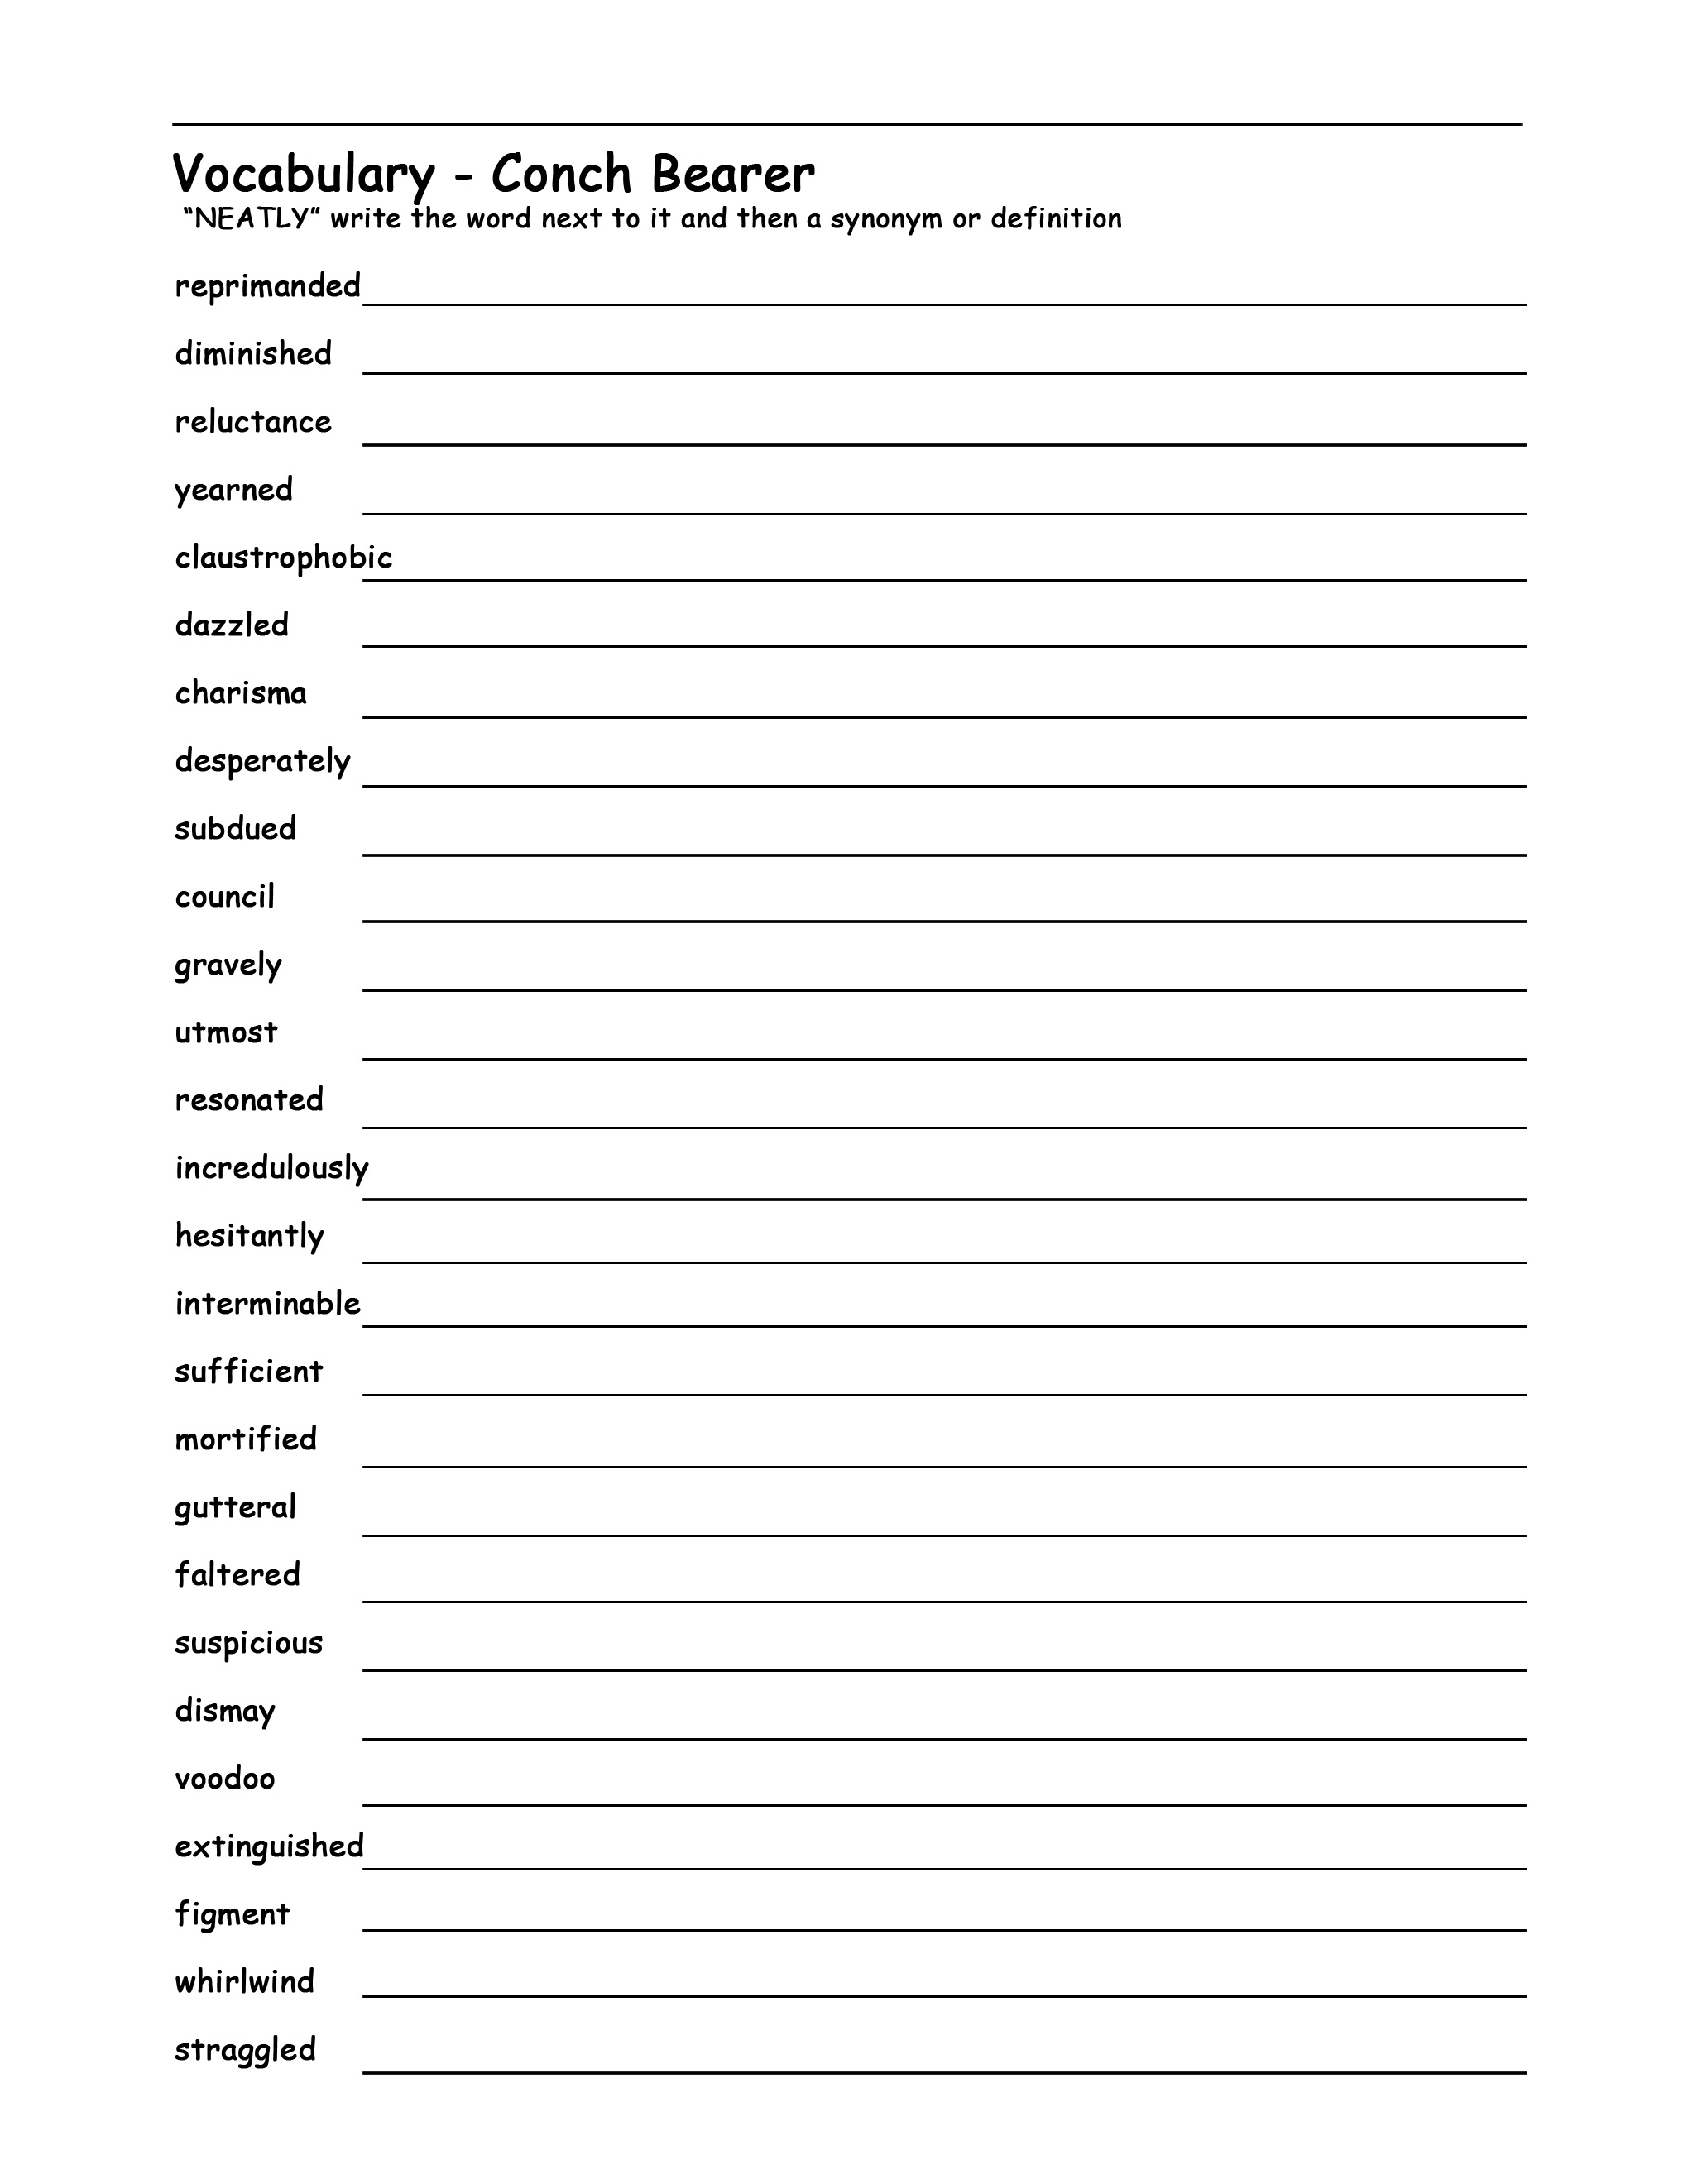 free-printable-figurative-language-worksheets-printable-templates